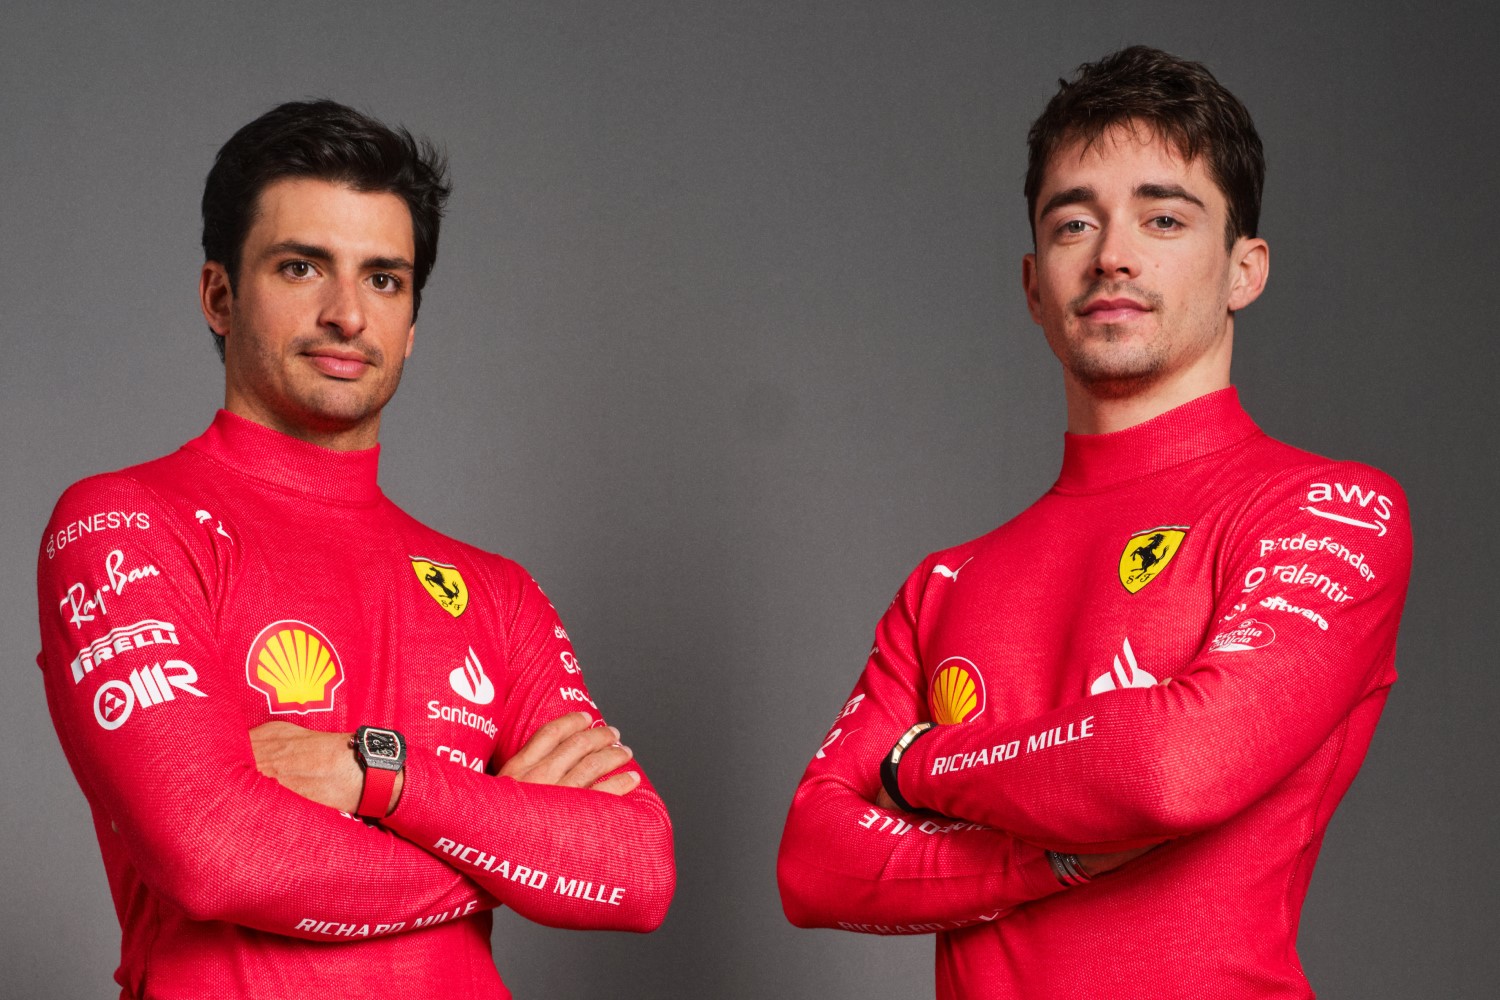 Ferrari drivers Carlos Sainz Jr. and Charles Leclerc